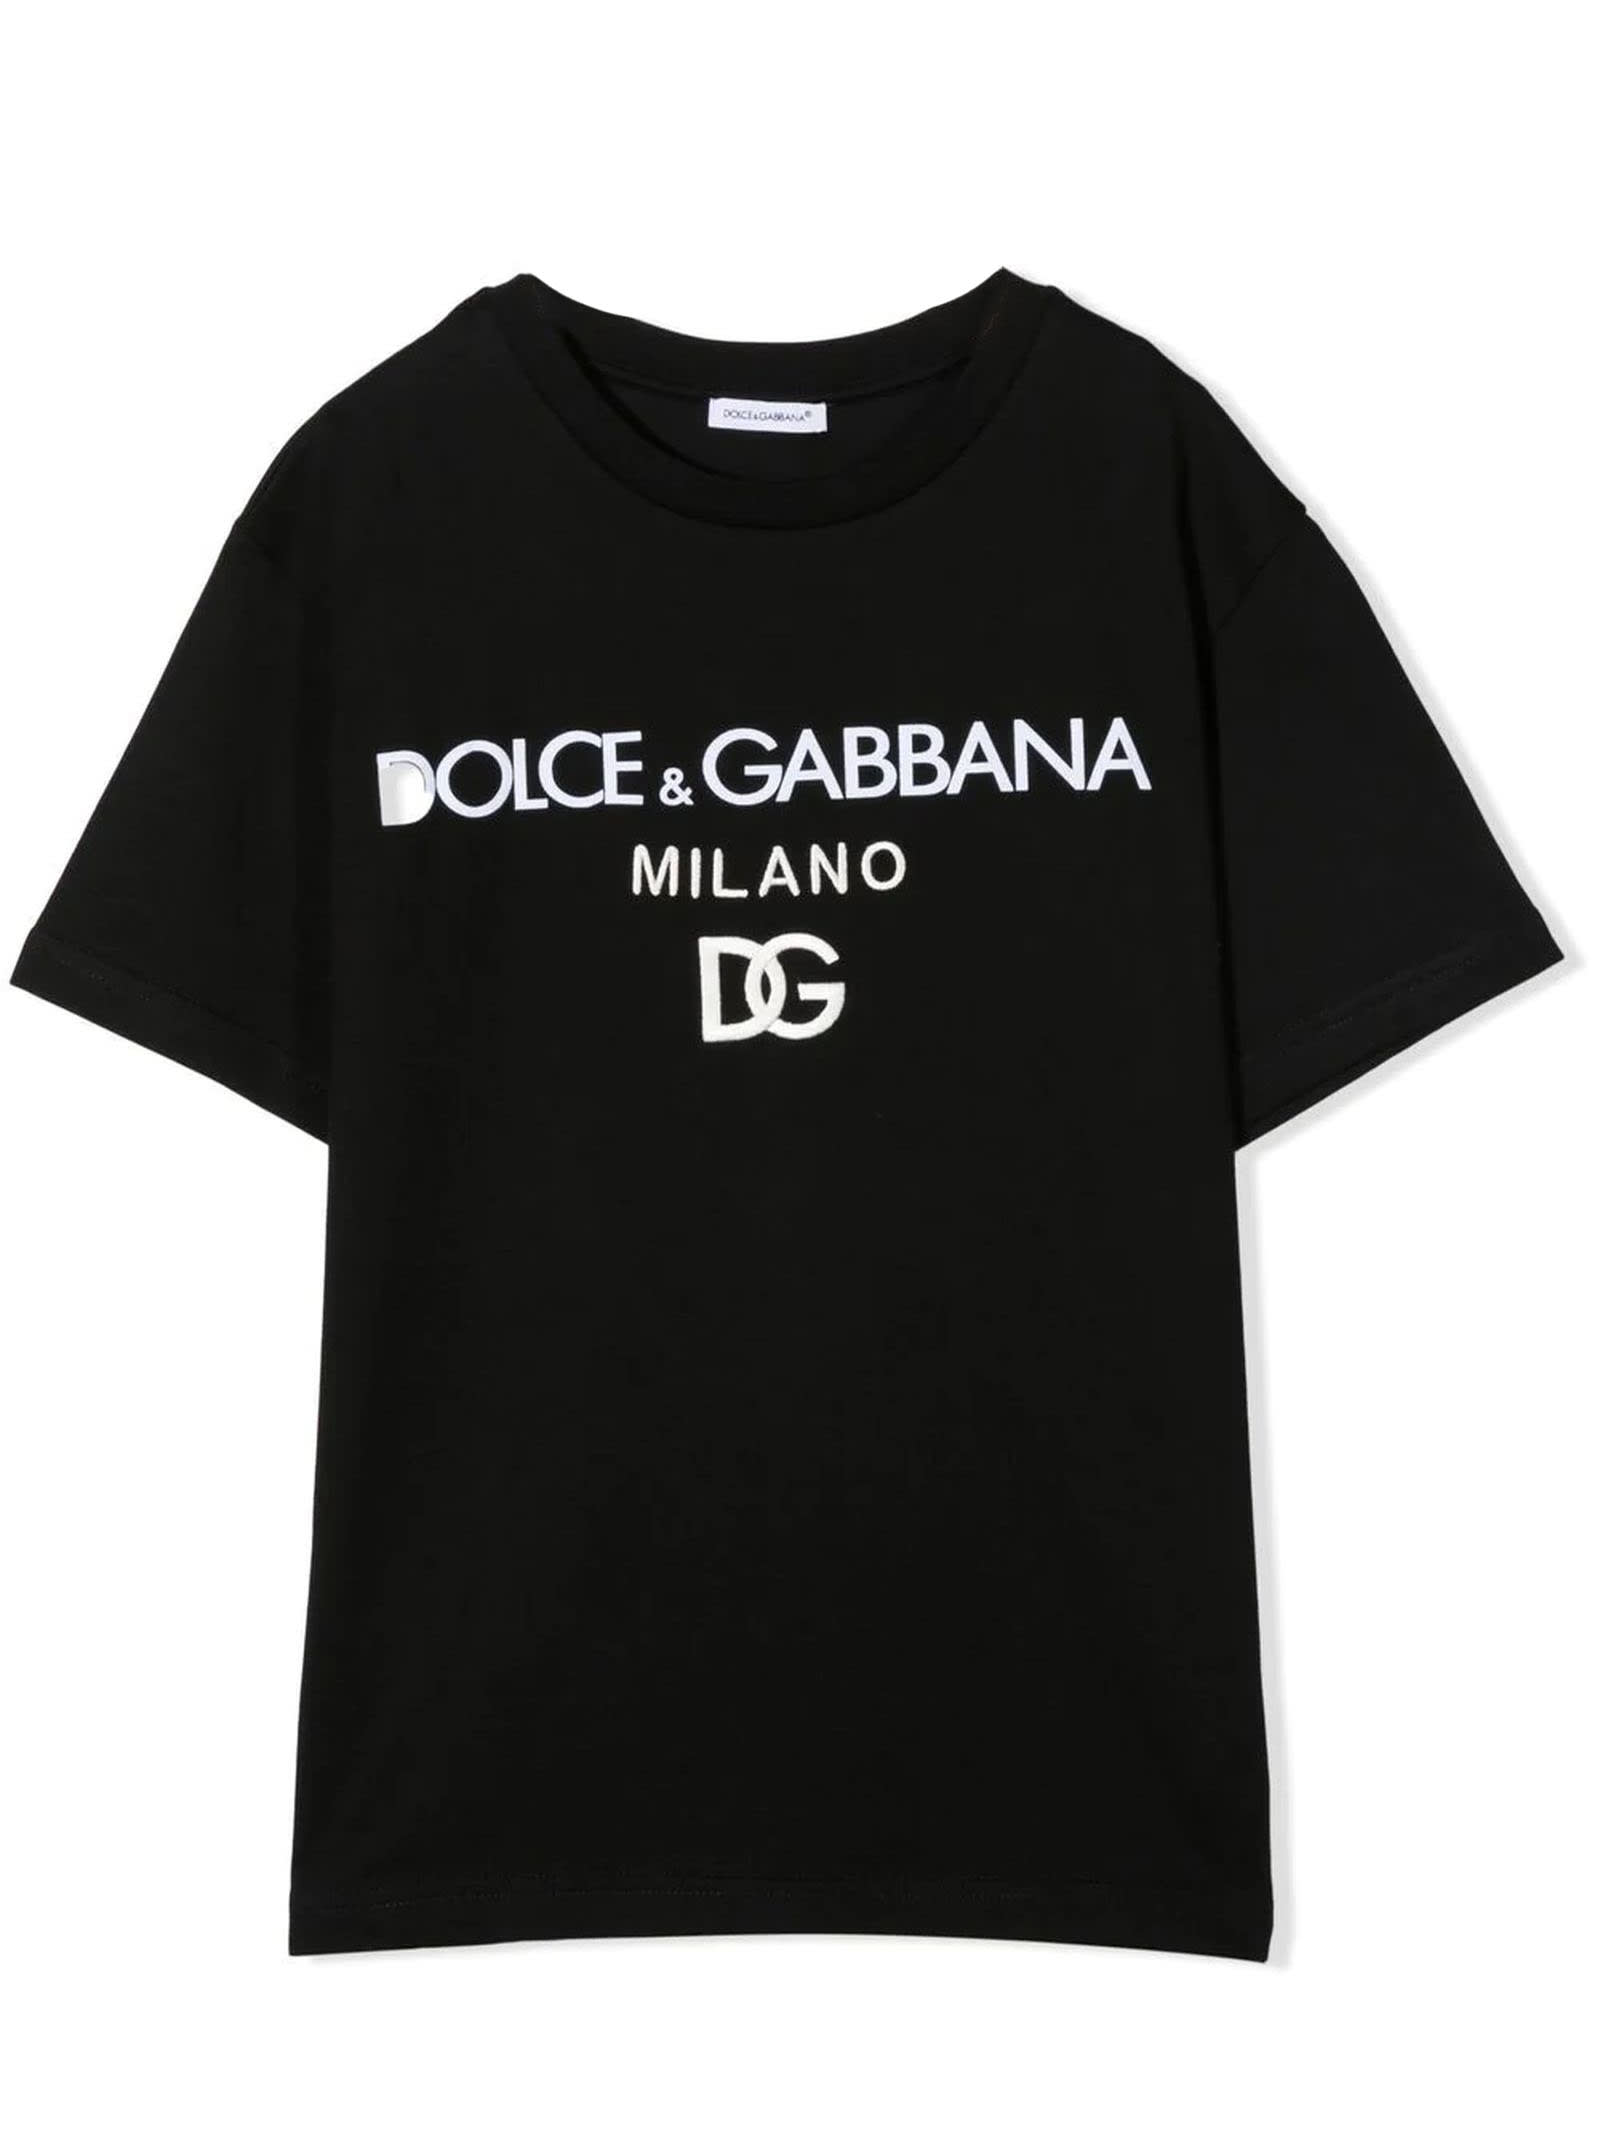 Dolce & Gabbana Black Cotton Tshirt